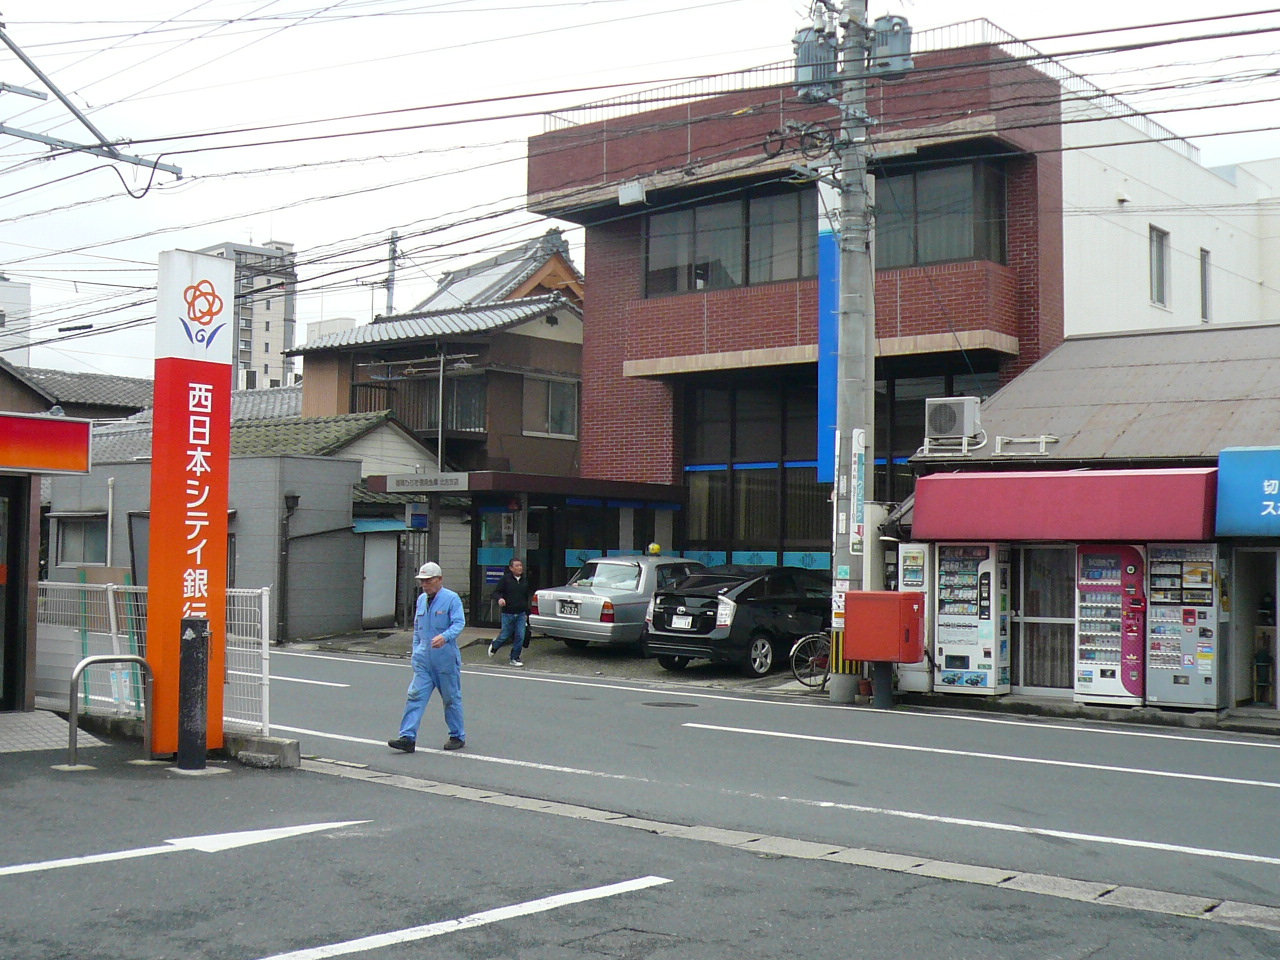 Bank. 427m to Fukuoka sound credit union northern branch (Bank)